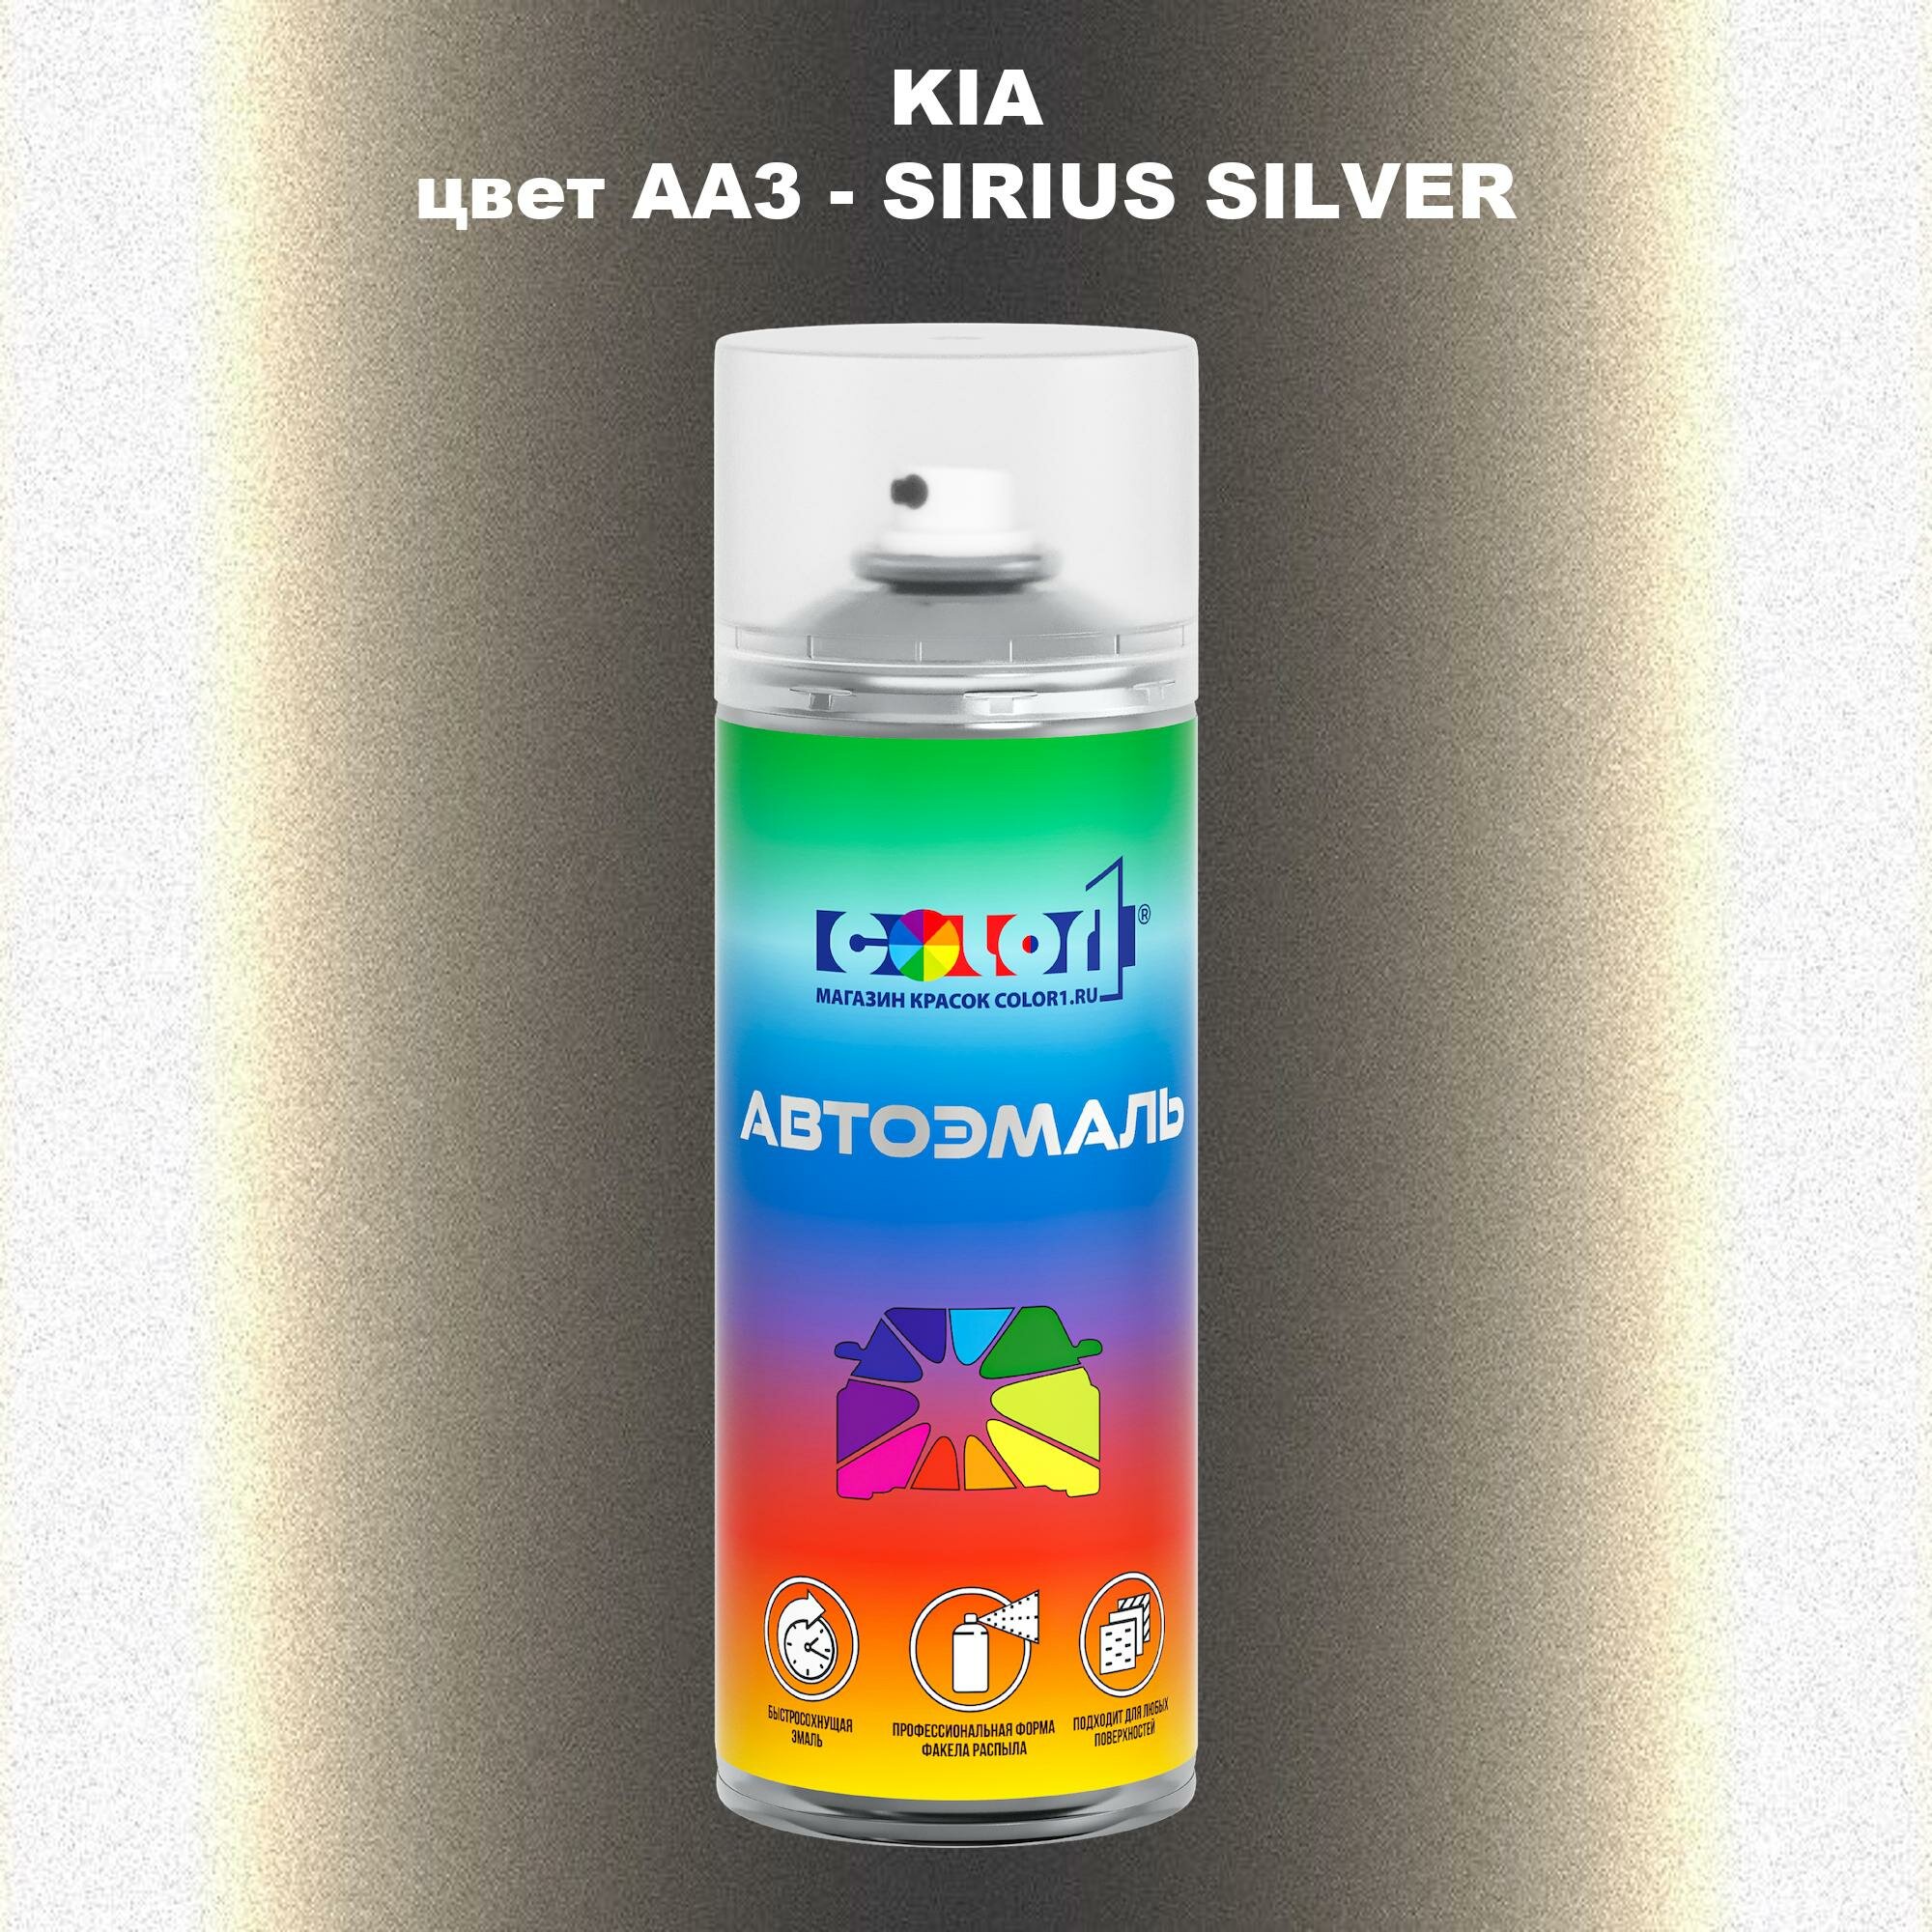 Аэрозольная краска COLOR1 для KIA, цвет AA3 - SIRIUS SILVER